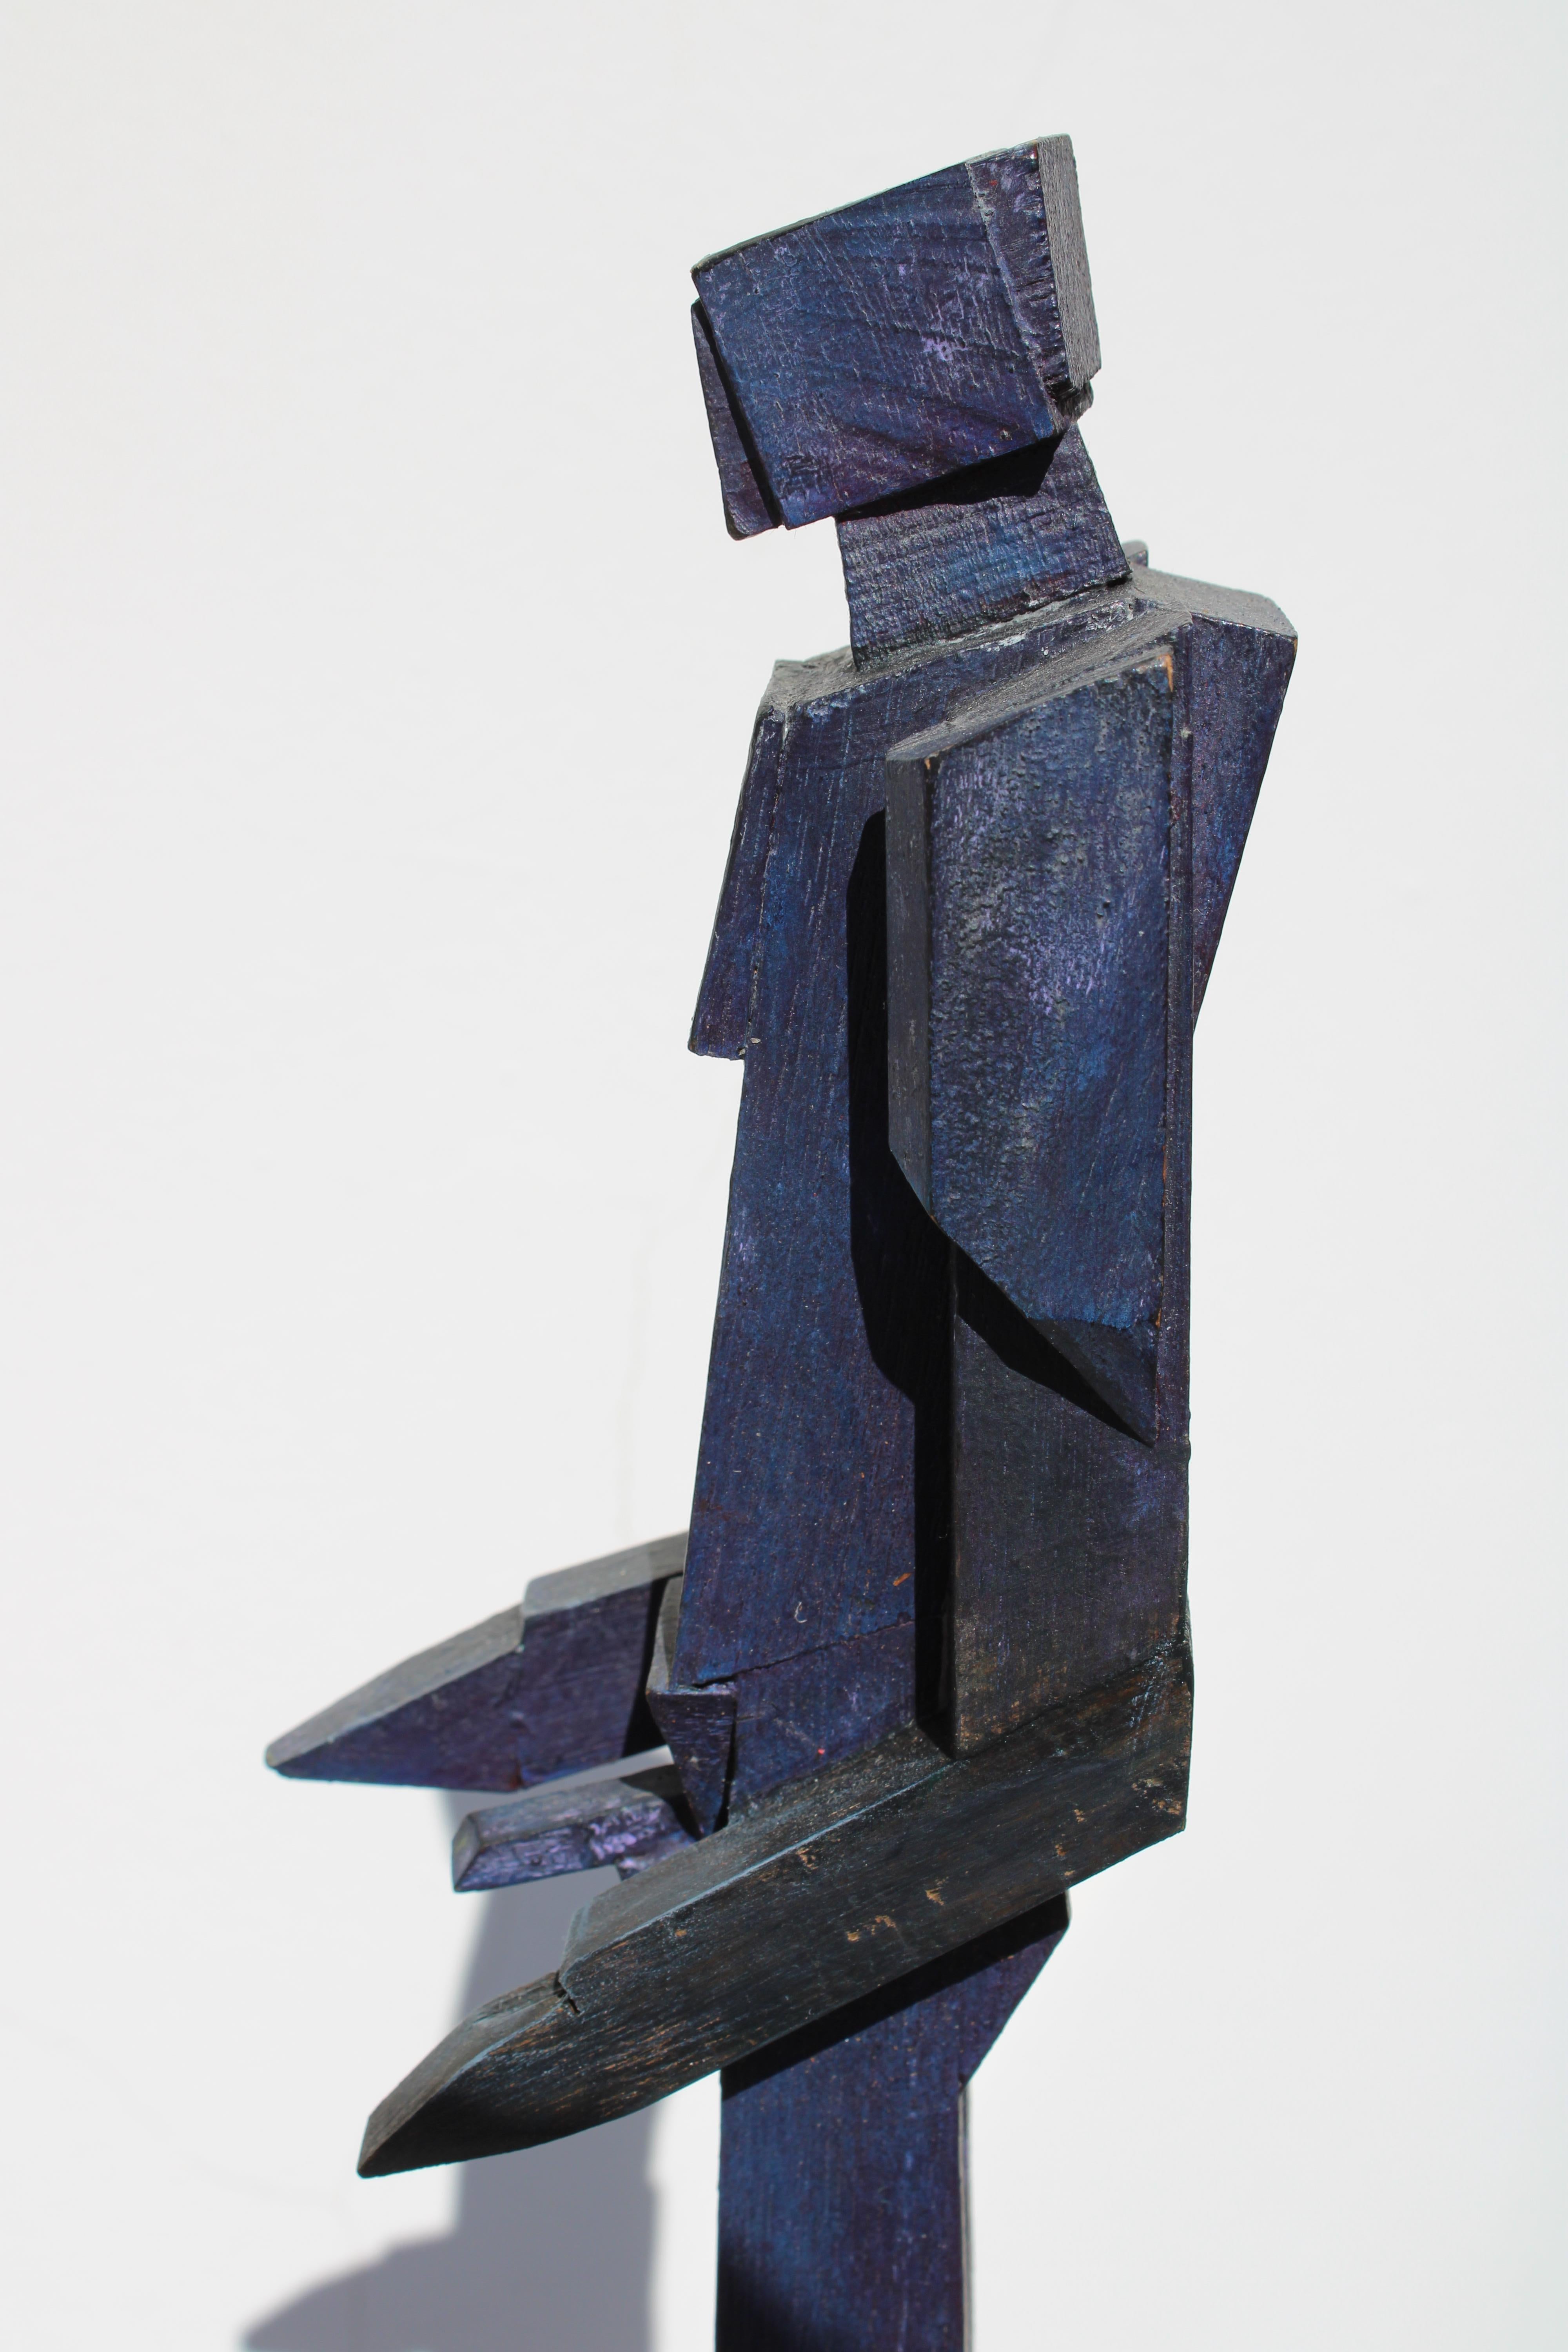 Wood Richard Faralla (1916 - 1996) Stick Figure For Sale